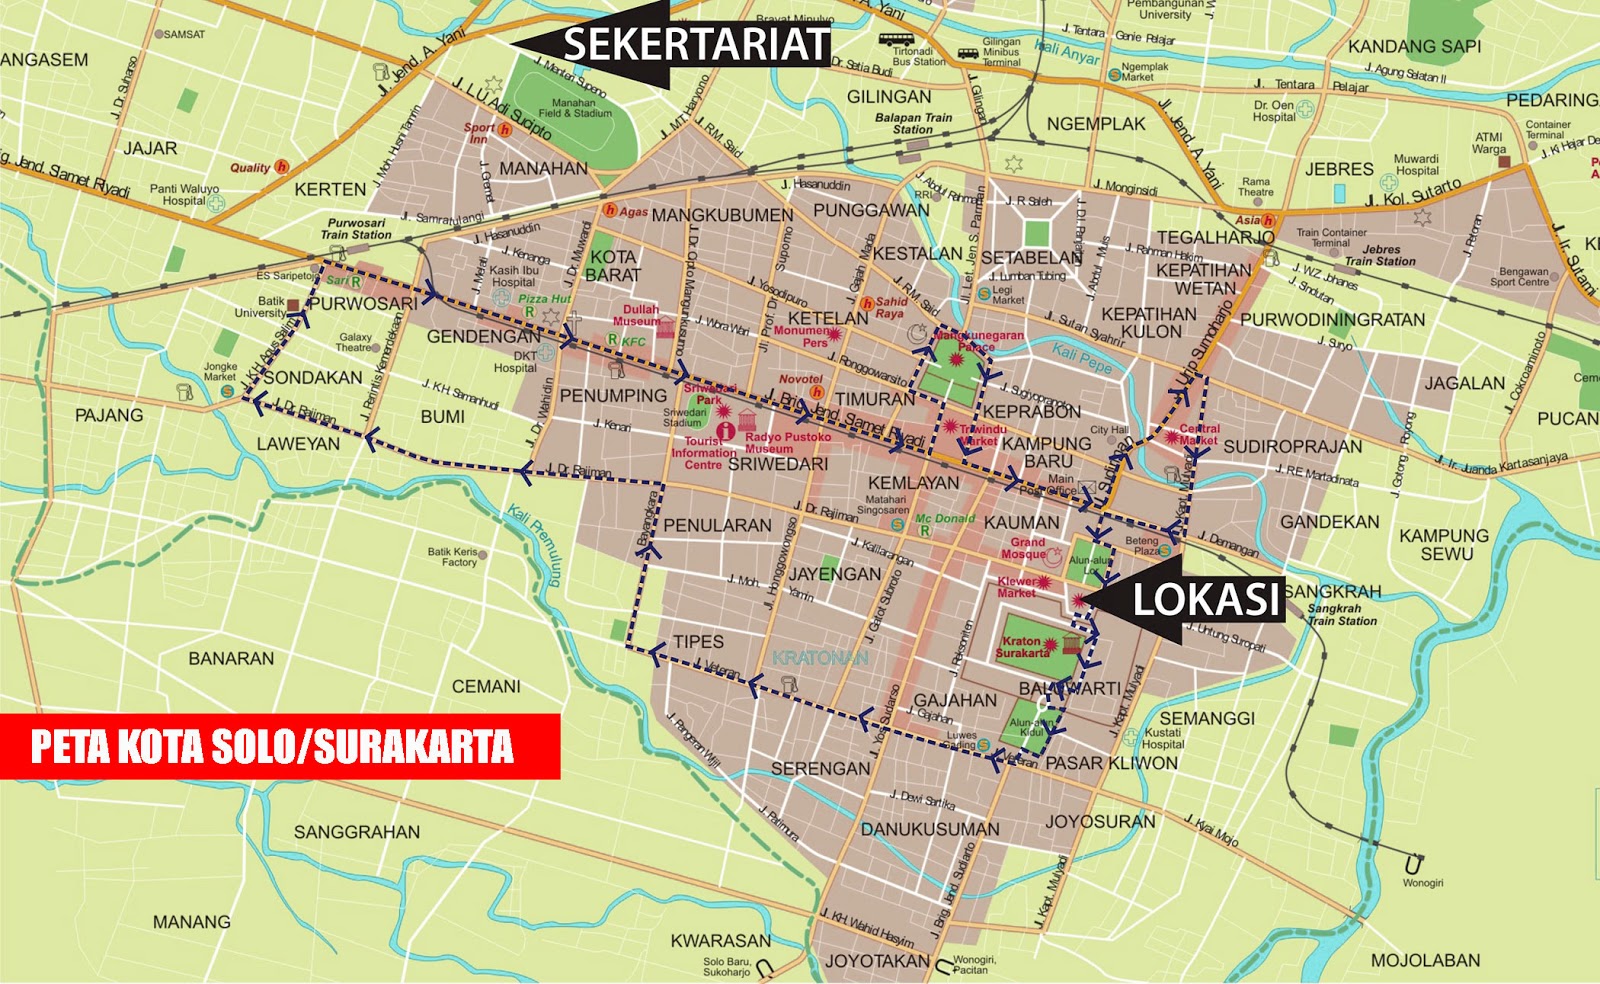   Peta  Kota  Surakarta  Sejarah and World Maps